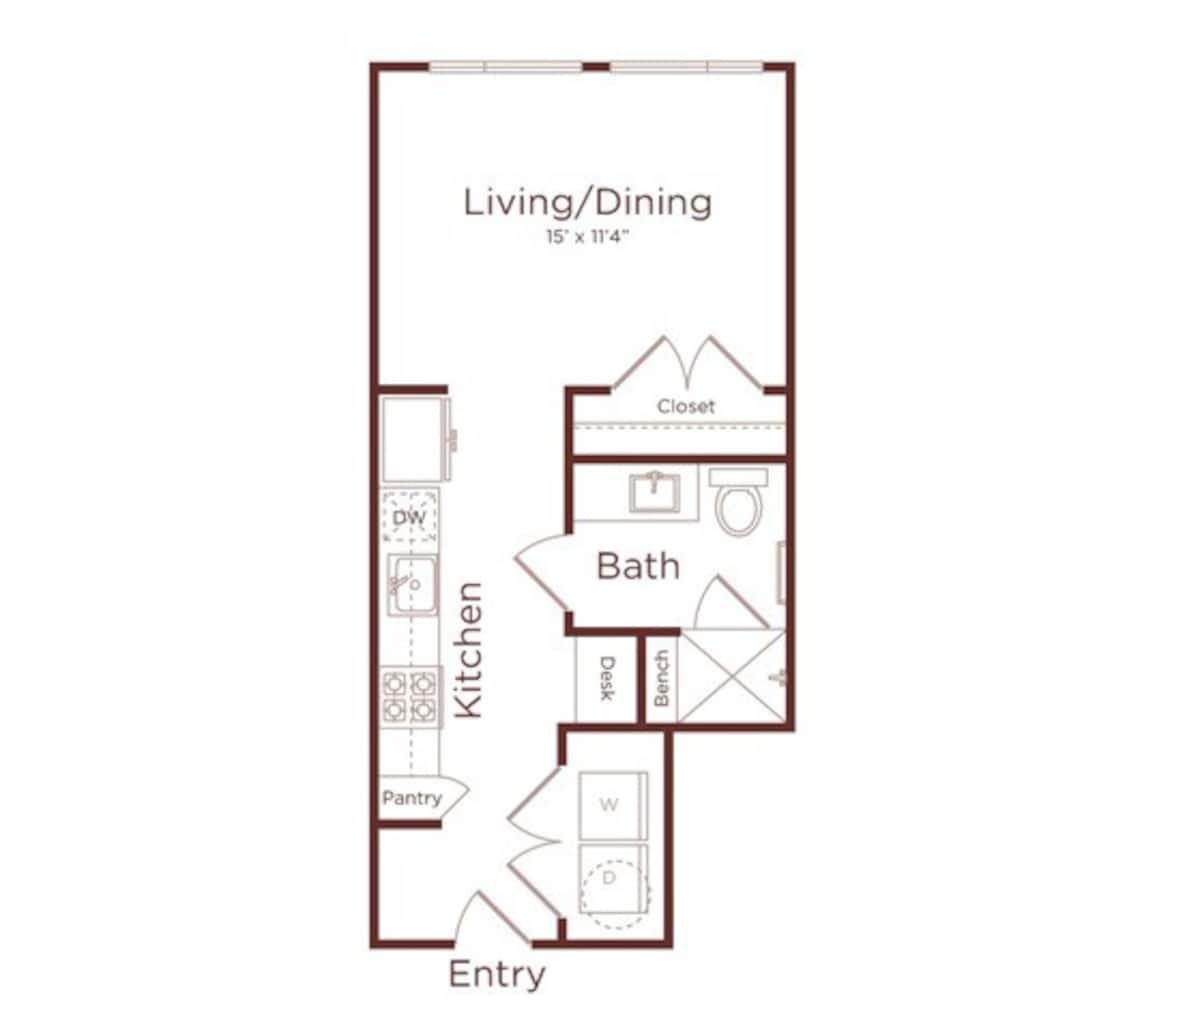 Floorplan diagram for A1B, showing 1 bedroom